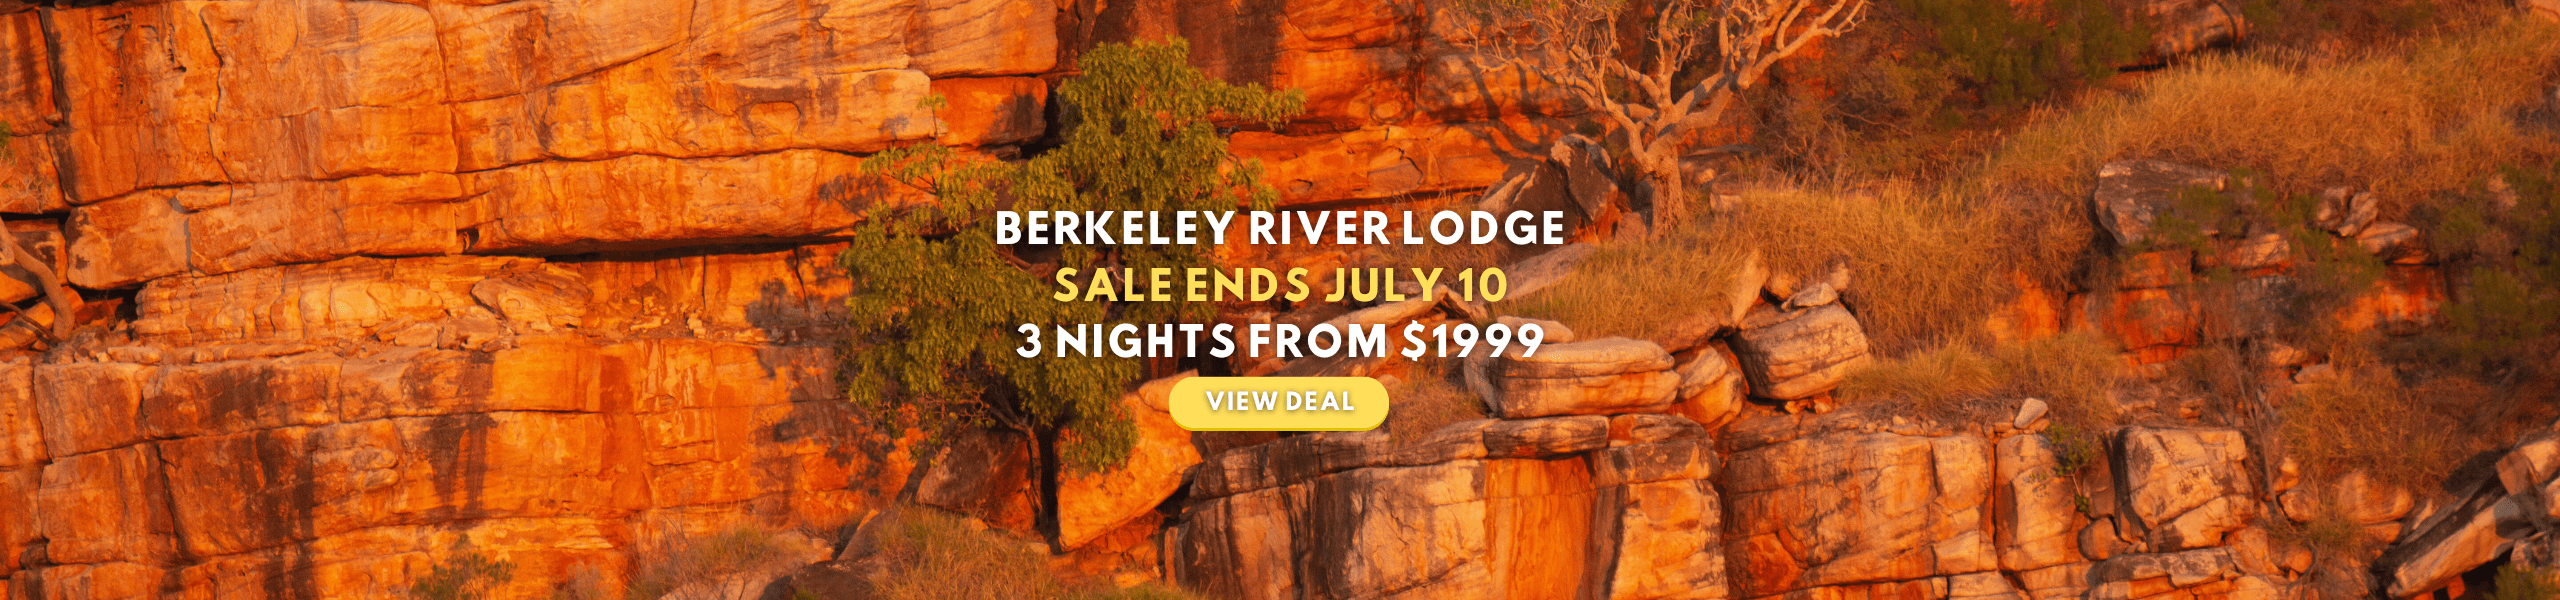 Last Minute Berkeley River Lodge Deal